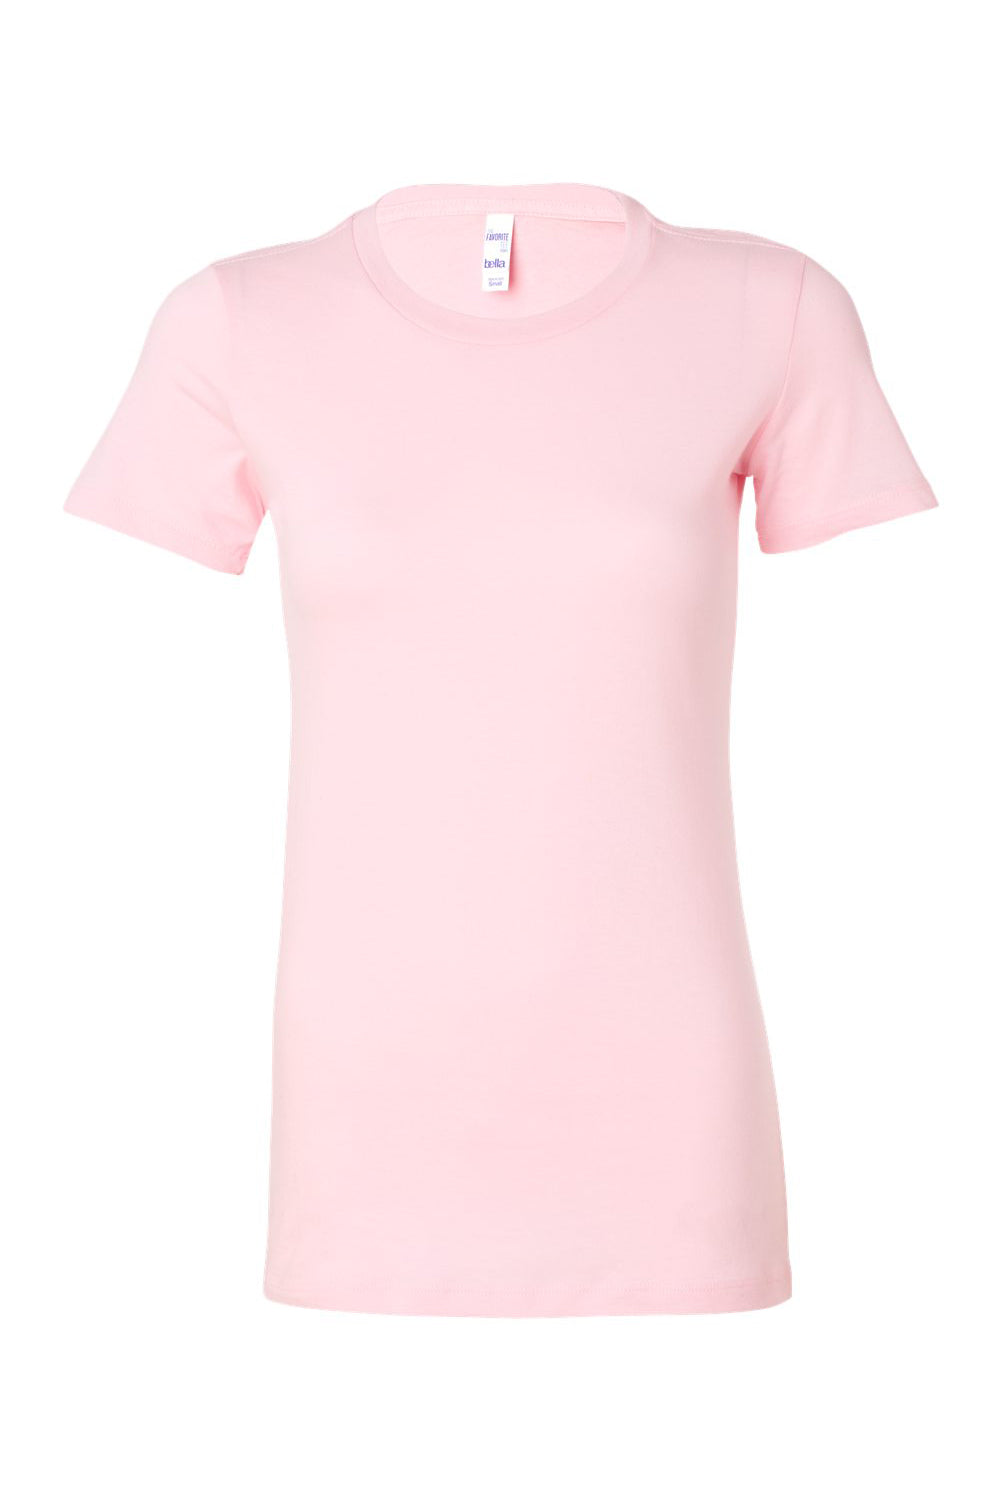 Bella + Canvas BC6004/6004 Womens The Favorite Short Sleeve Crewneck T-Shirt Pink Flat Front